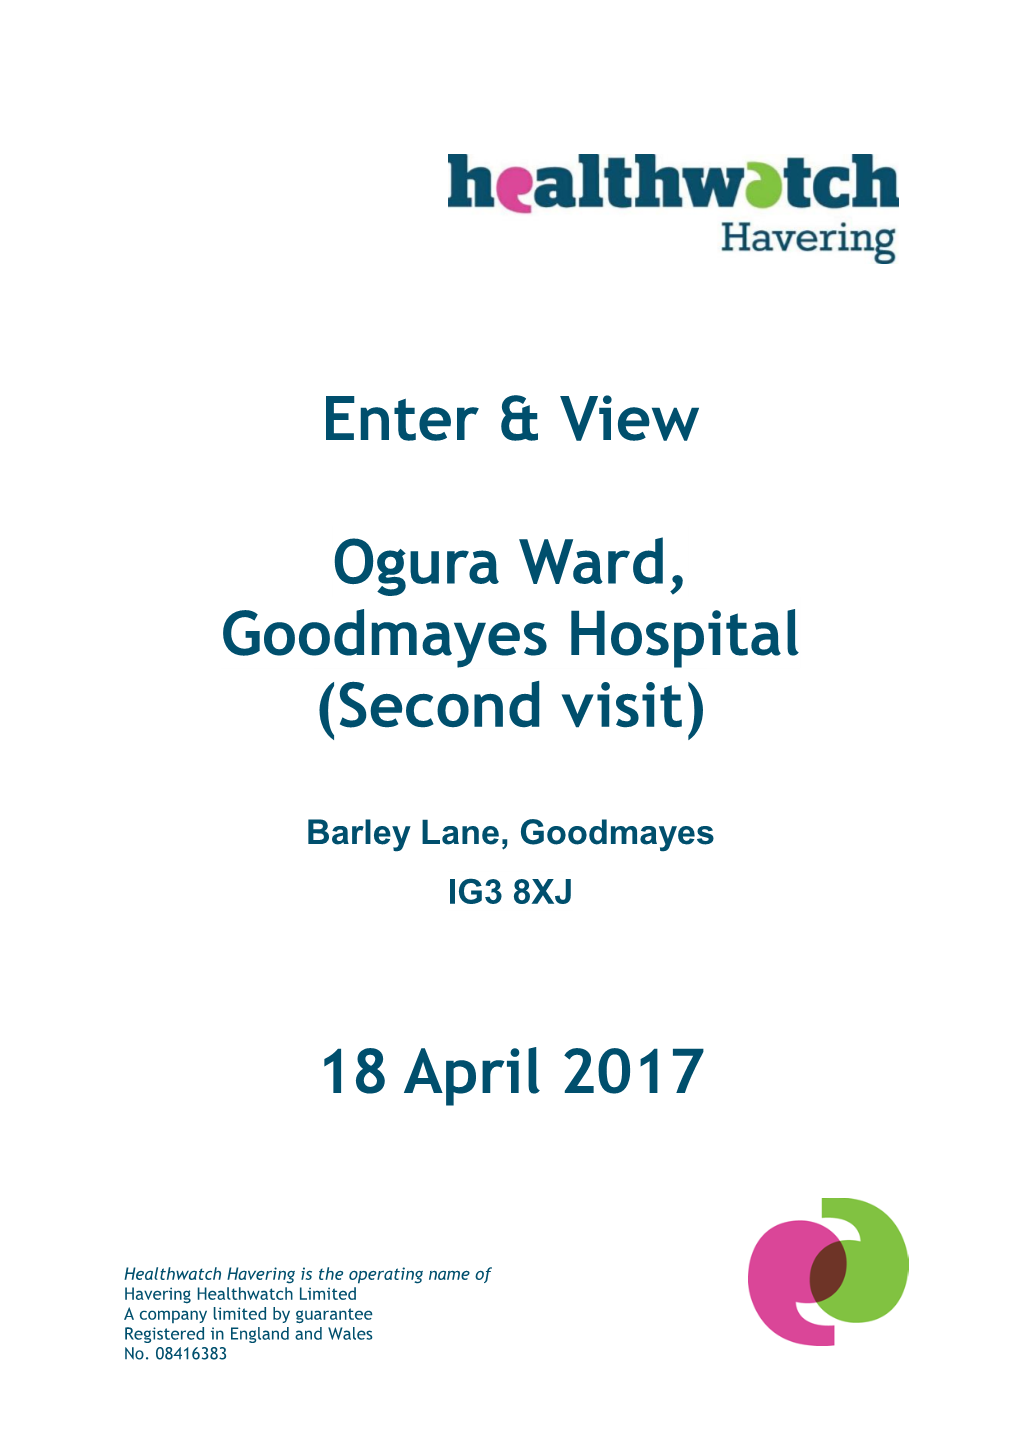 Enter & View Ogura Ward, Goodmayes Hospital